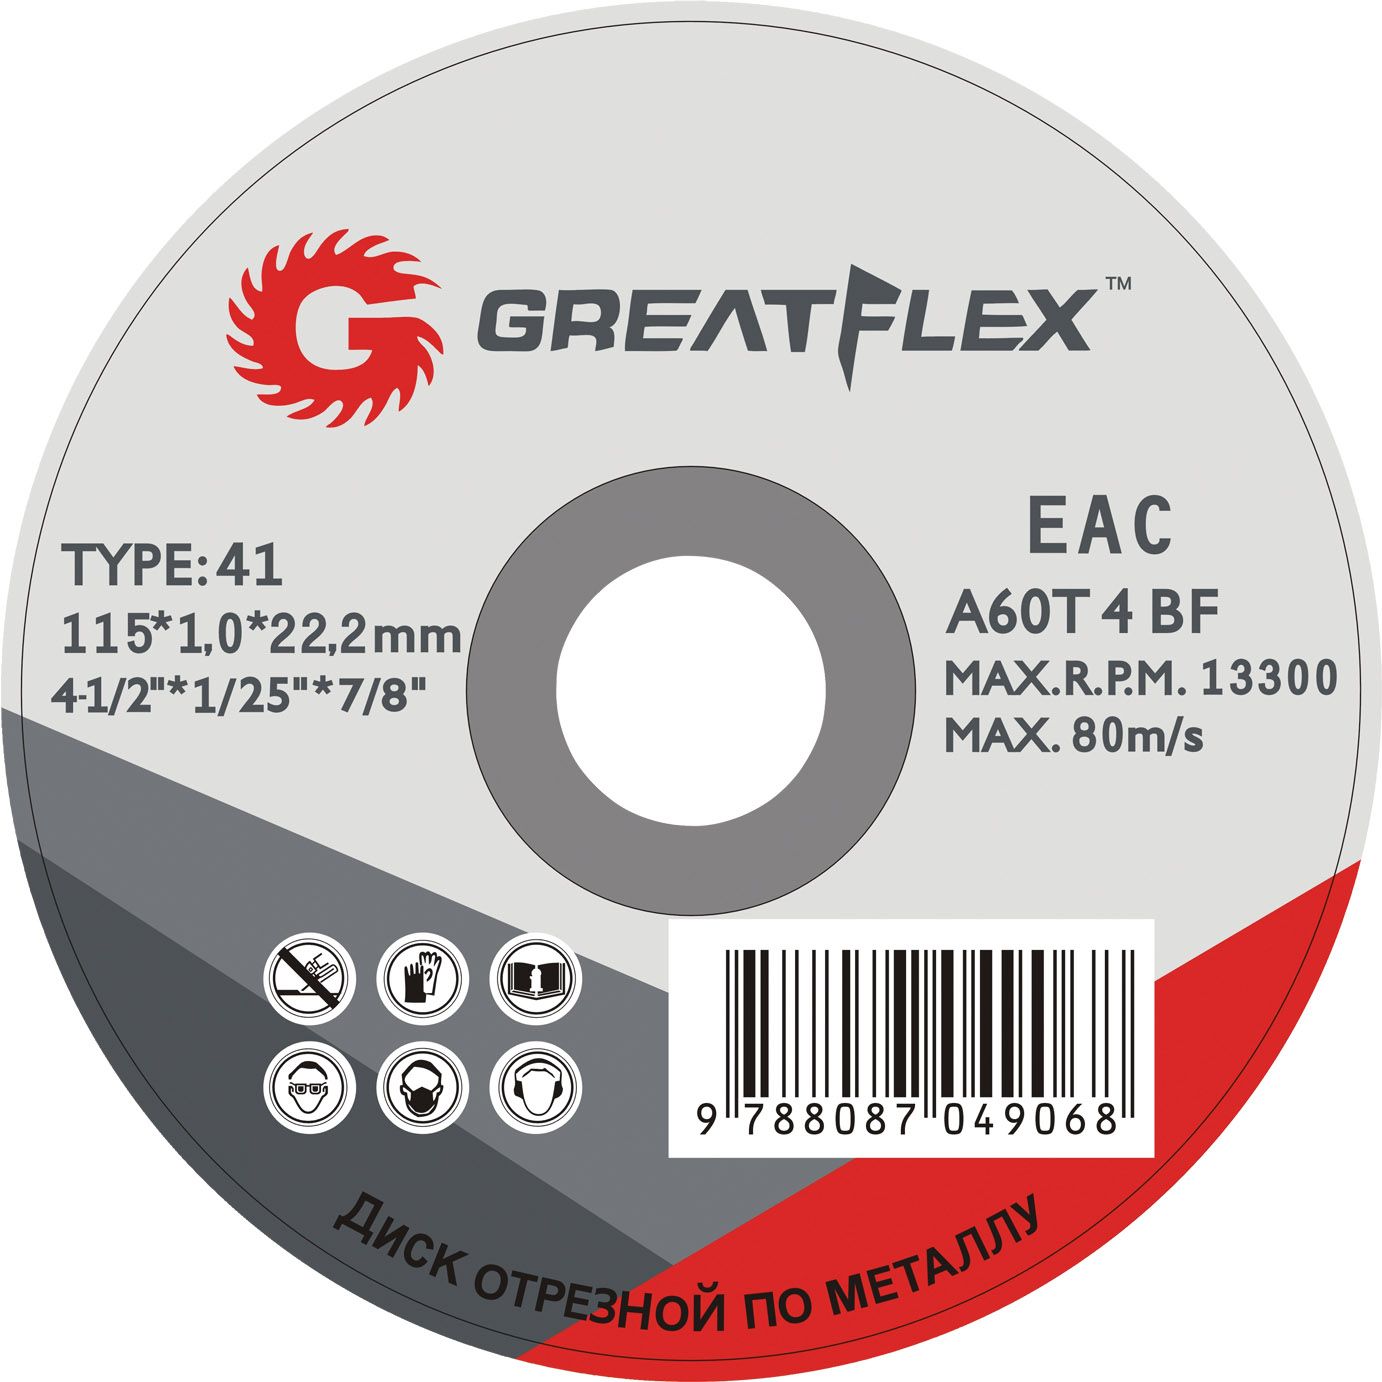 Greatflex 125 мм Отрезной круг по металлу, 1 мм